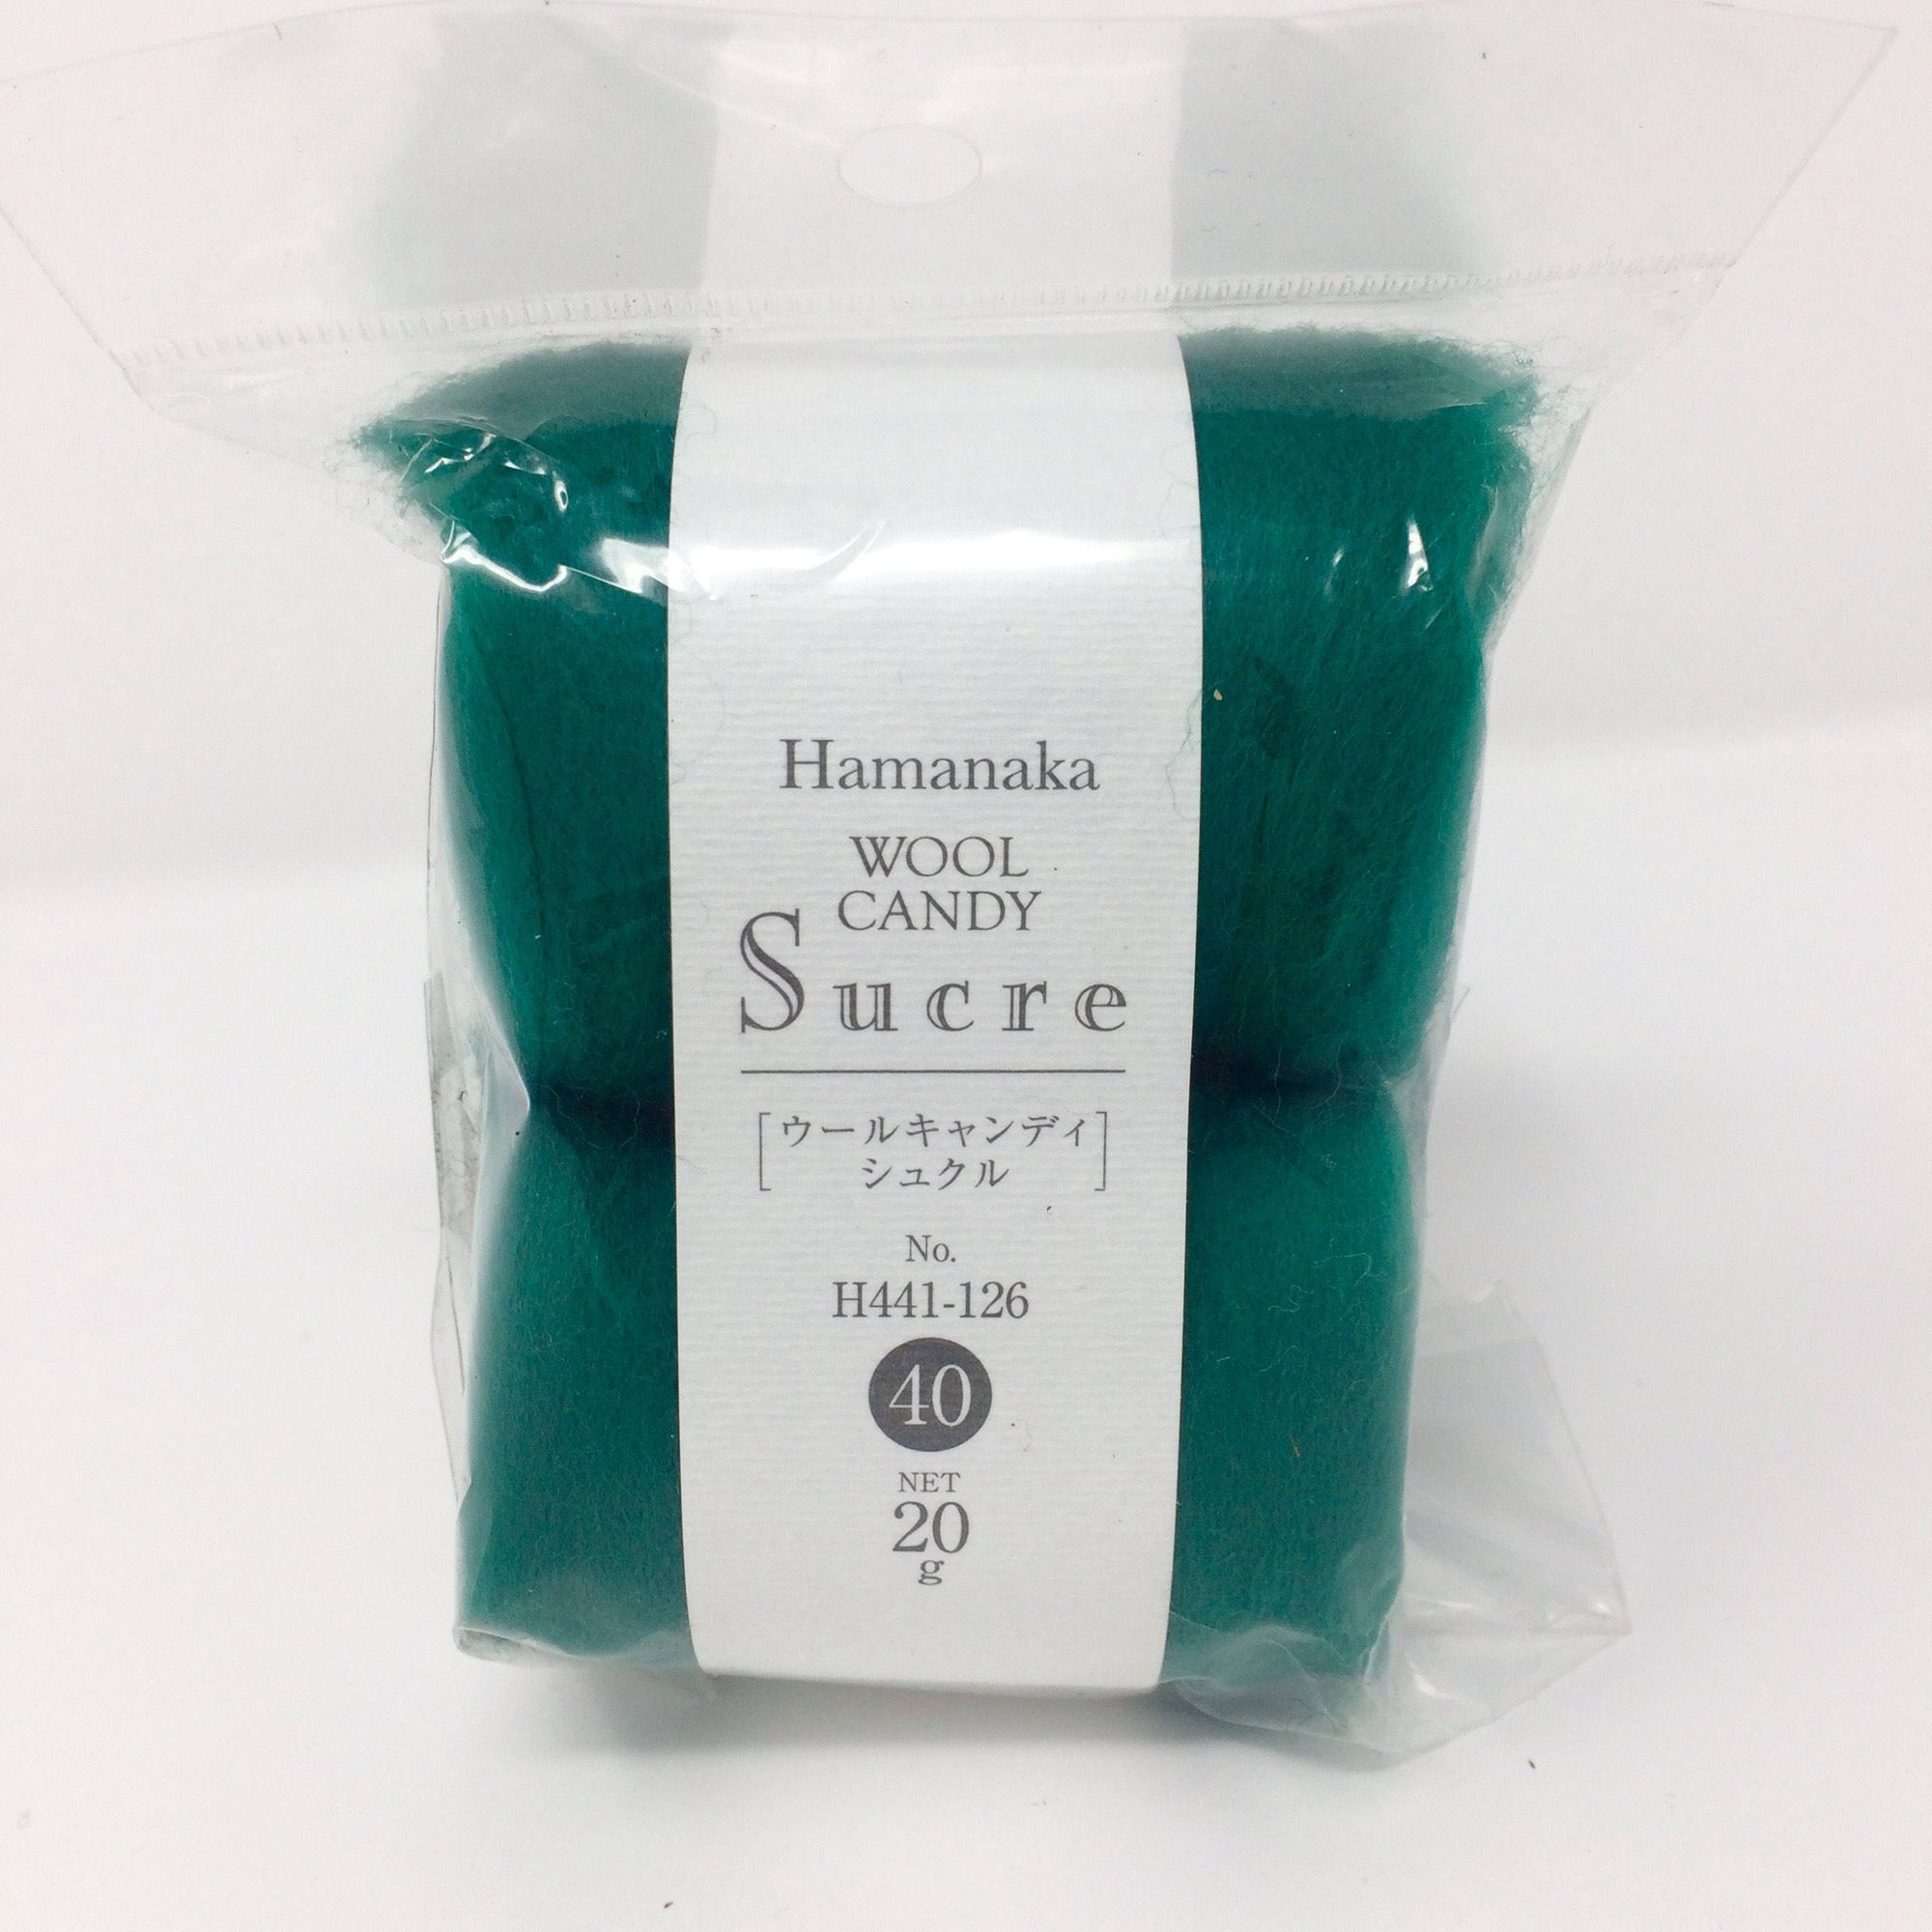 Hamanaka Wool Candy Sucre - Green 20g